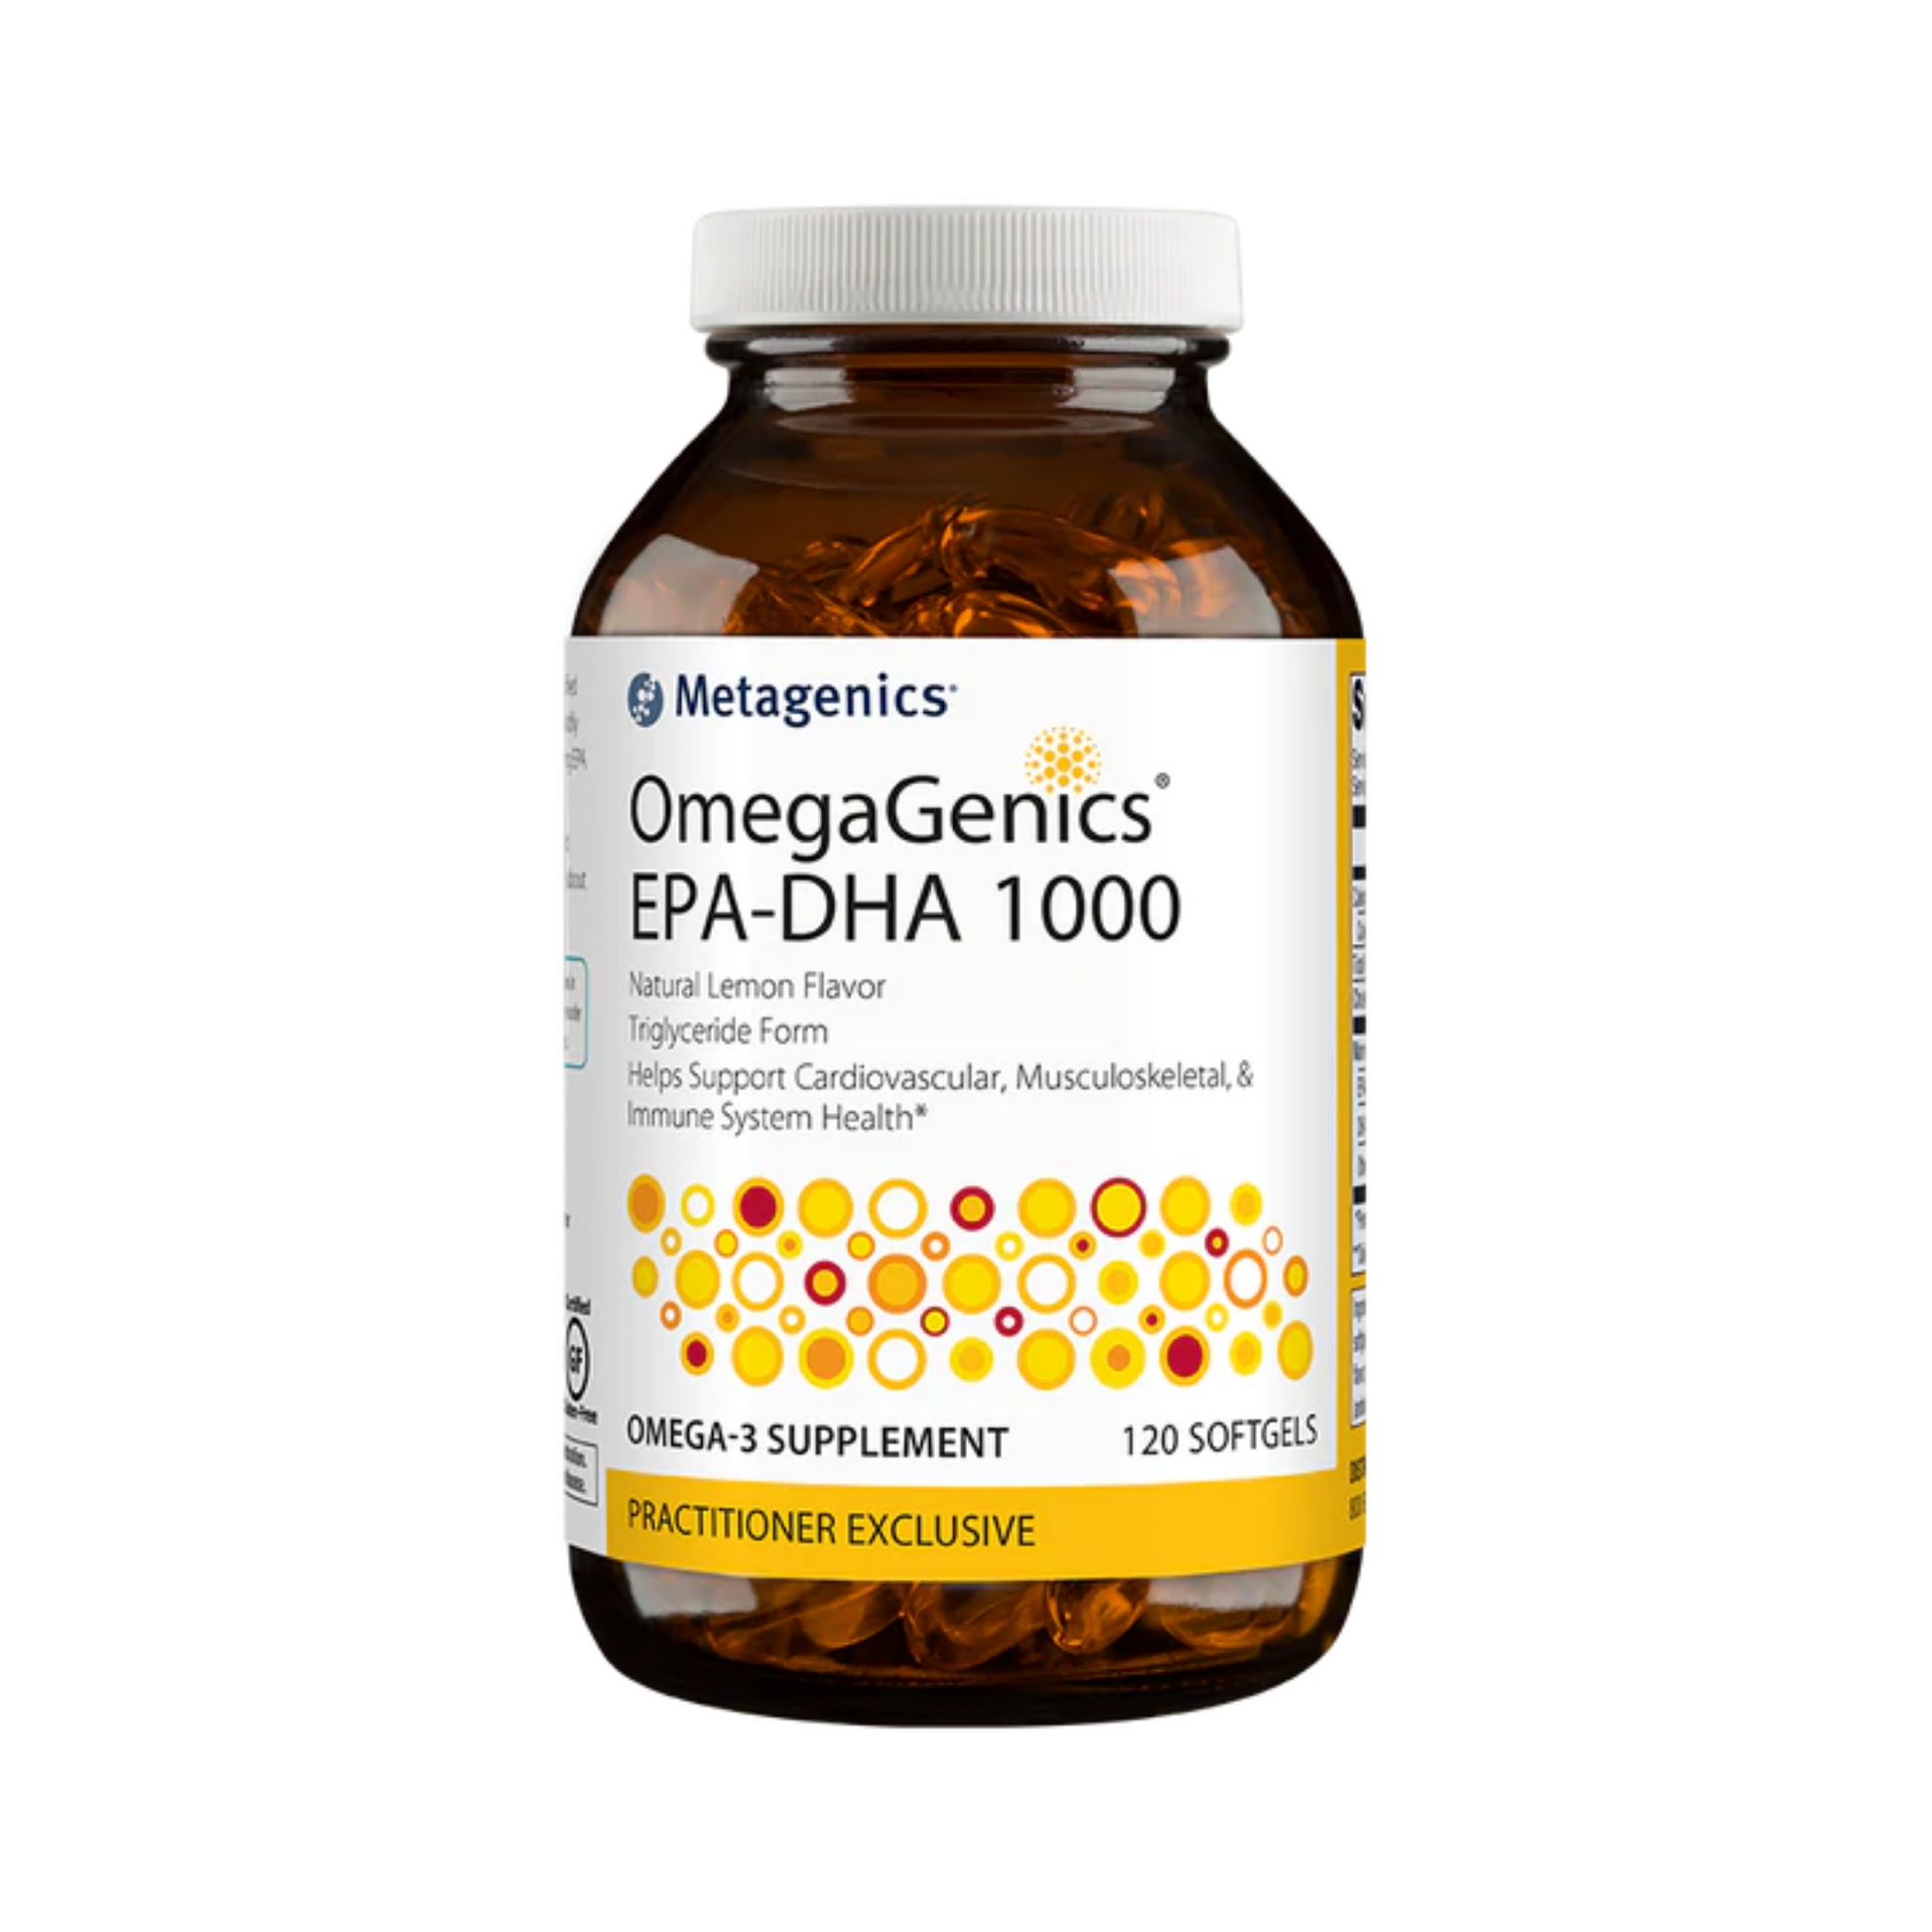 Primary Image of OmegaGenics 1000 EPA-DHA